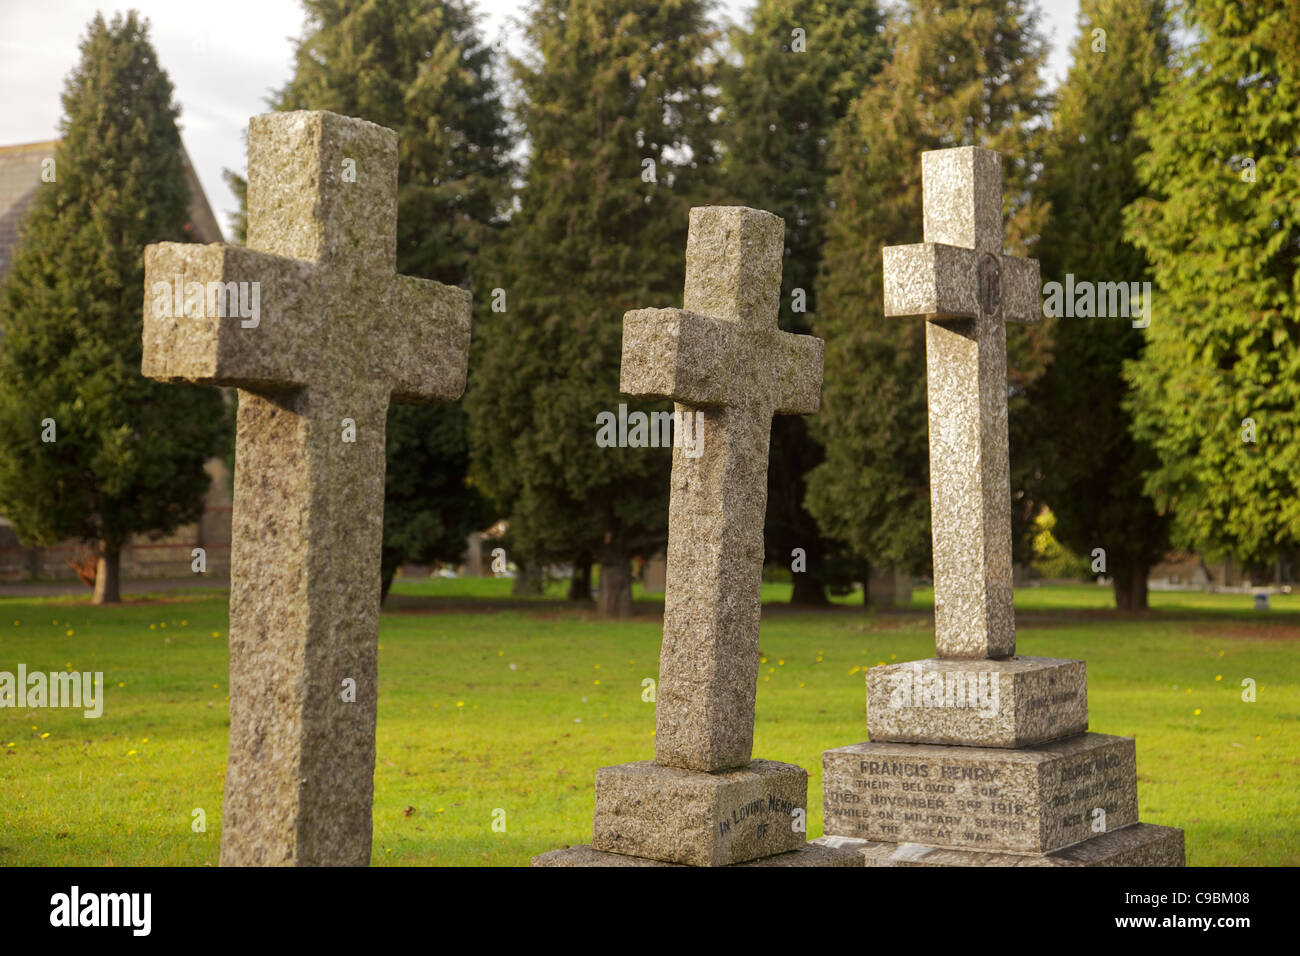 Headstones in a cemetery, Biggleswade, England Stock Photo